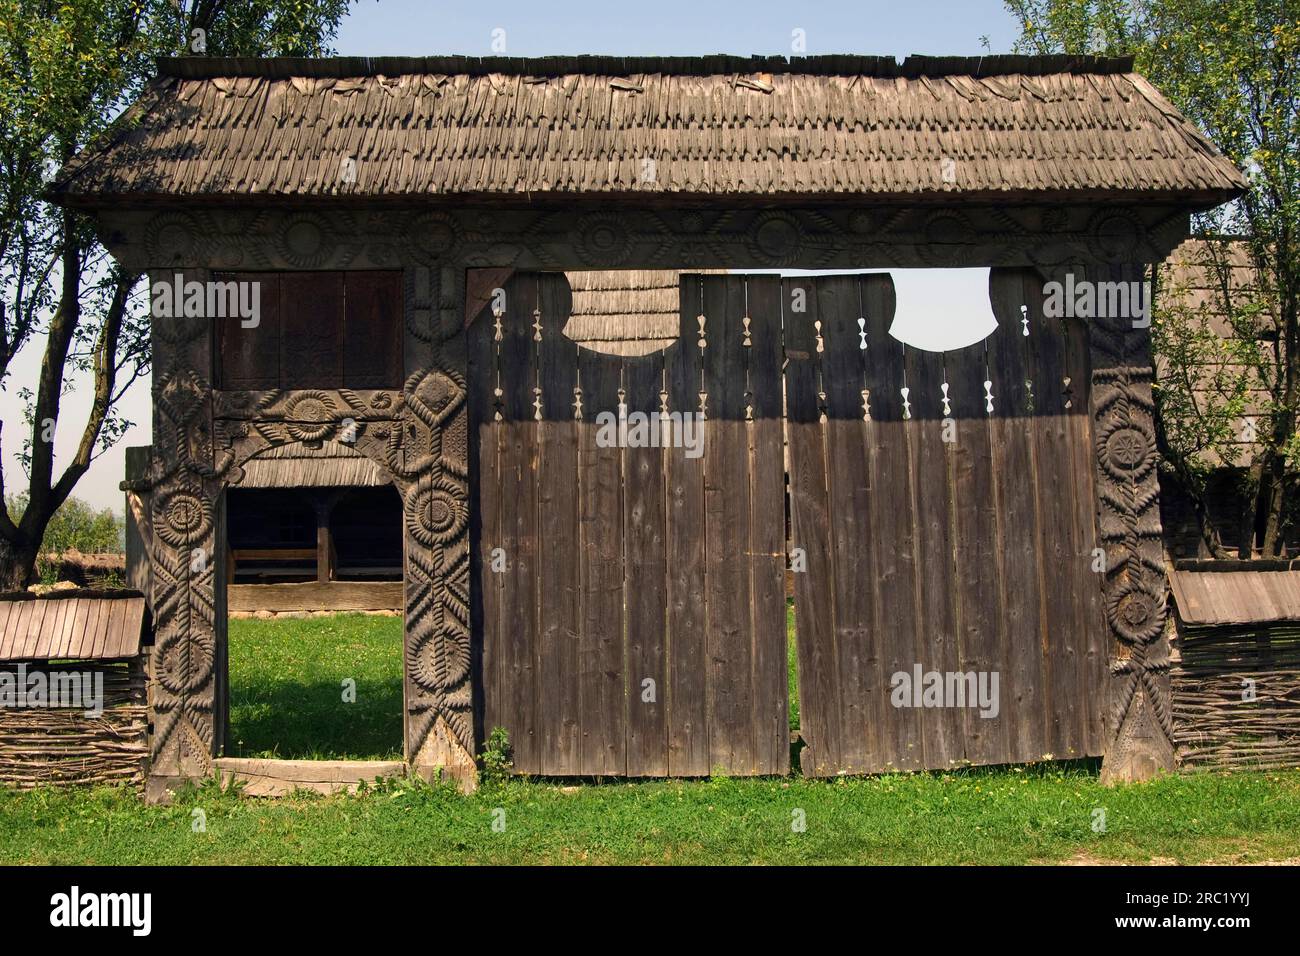 Carving on wooden gate, Ethnographic Museum, Sighetu Marmatiei, Maramures, Romania Stock Photo